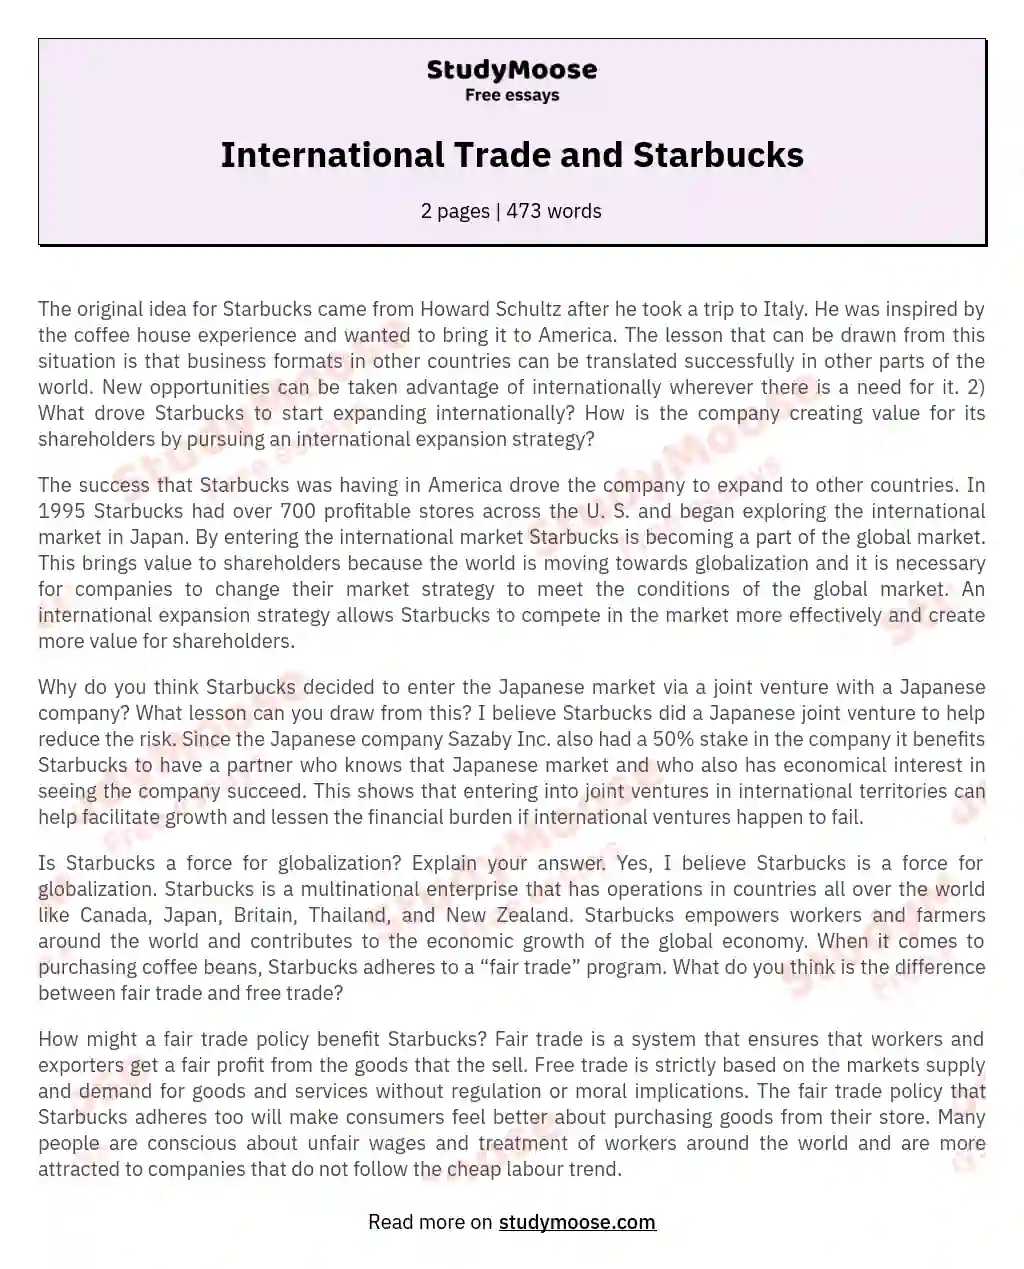 International Trade and Starbucks